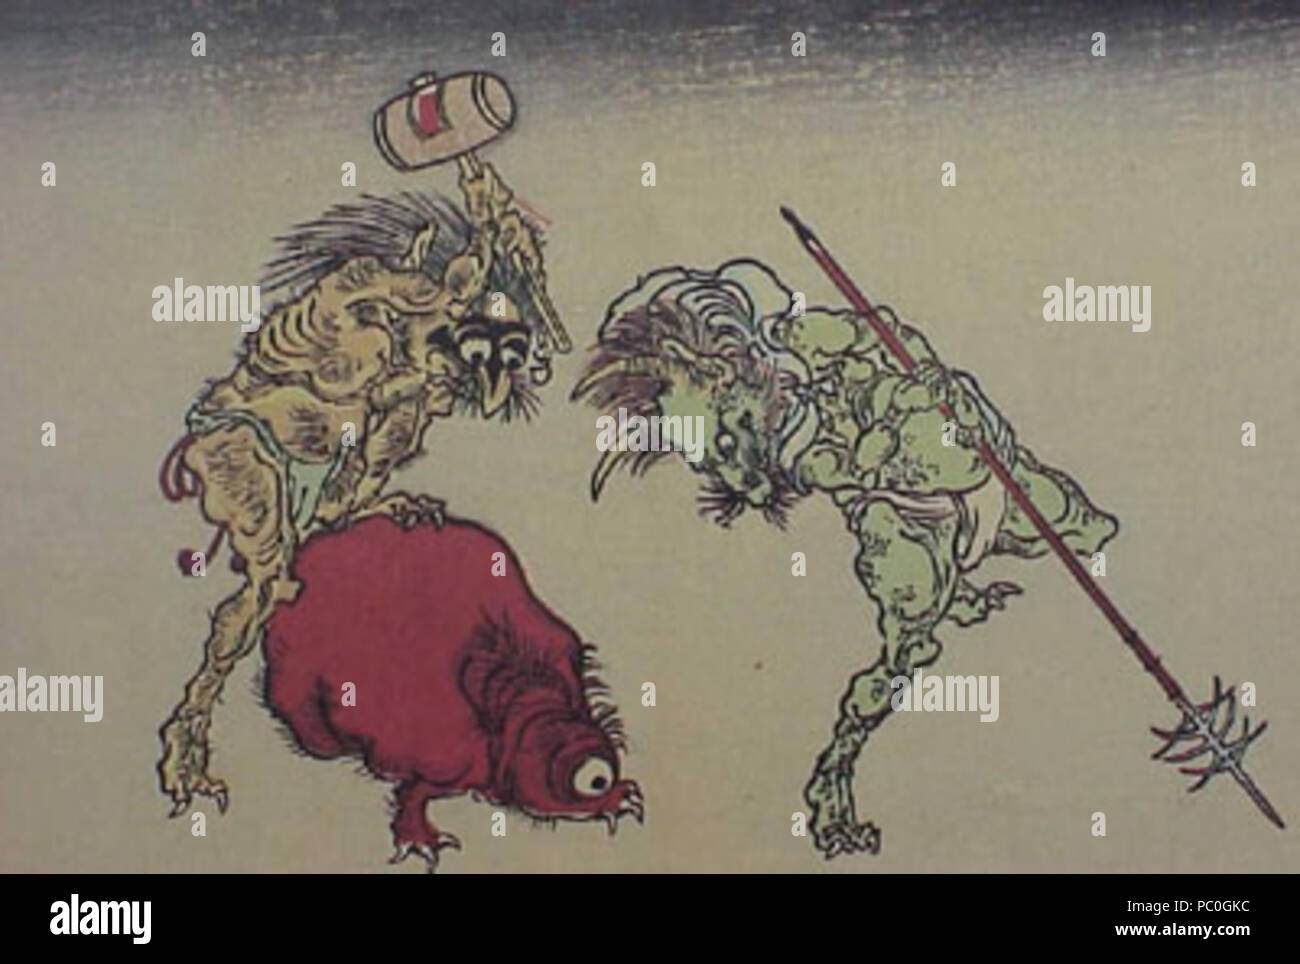 Yorimasa slays the Vampire', 1912. Minamoto no Yorimasa, master of arrows  and his servant Ino Hayata are instructed to kill the demon yokai Nue at  the imperial court of Nijo Castle. From